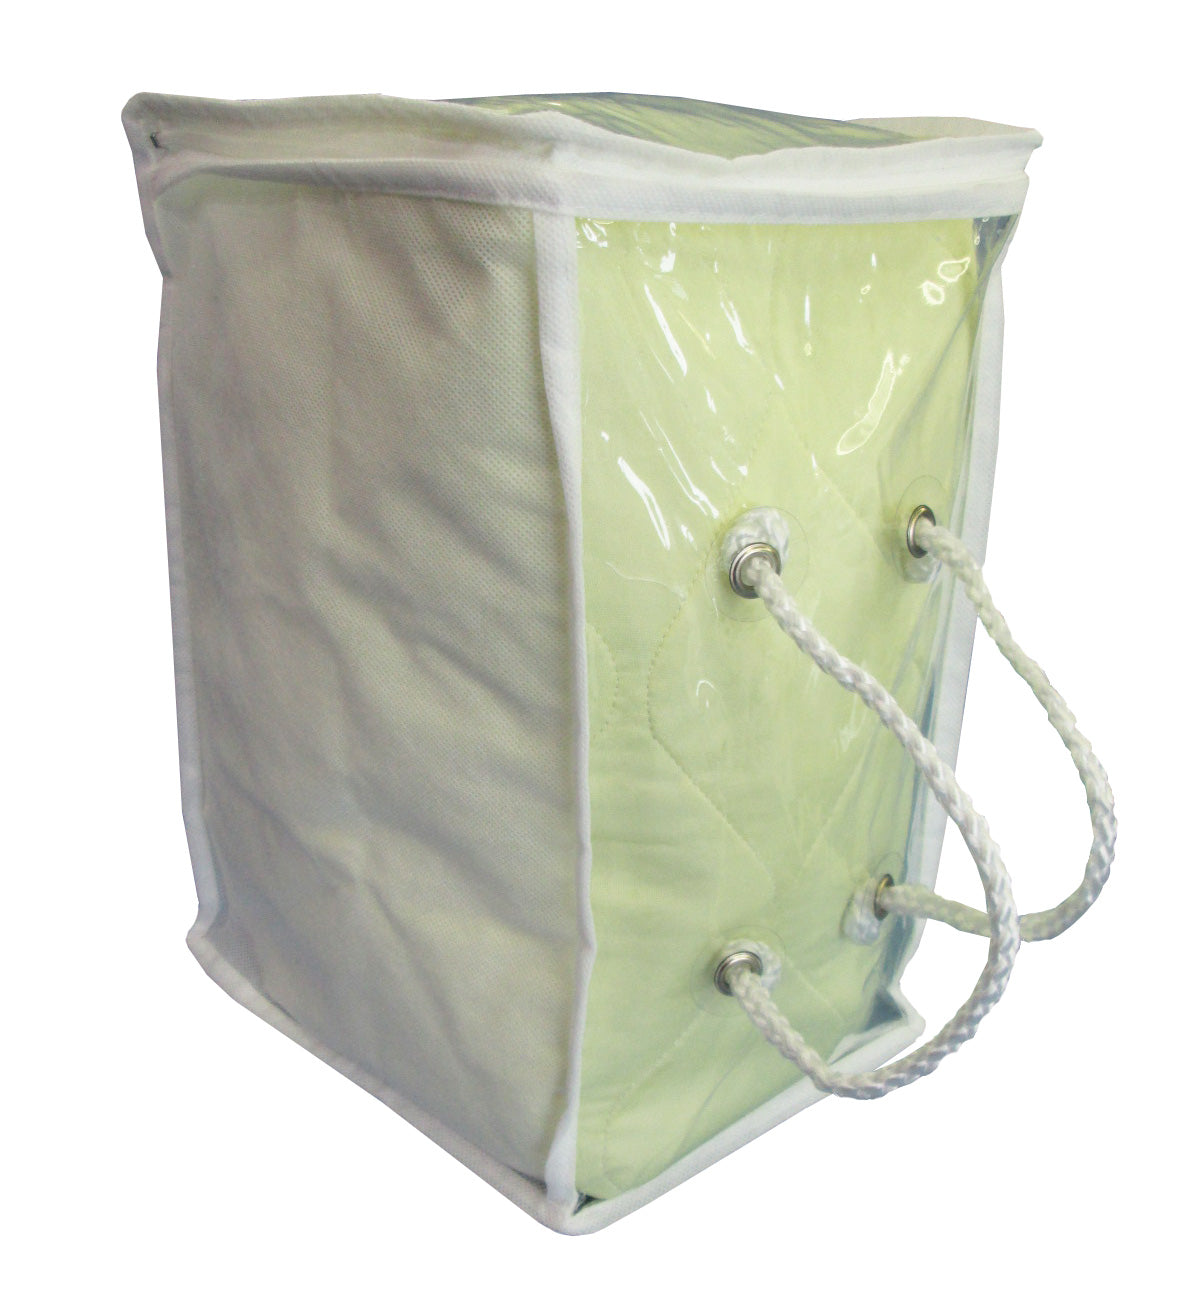 JLSB-0011 Sewn Bag